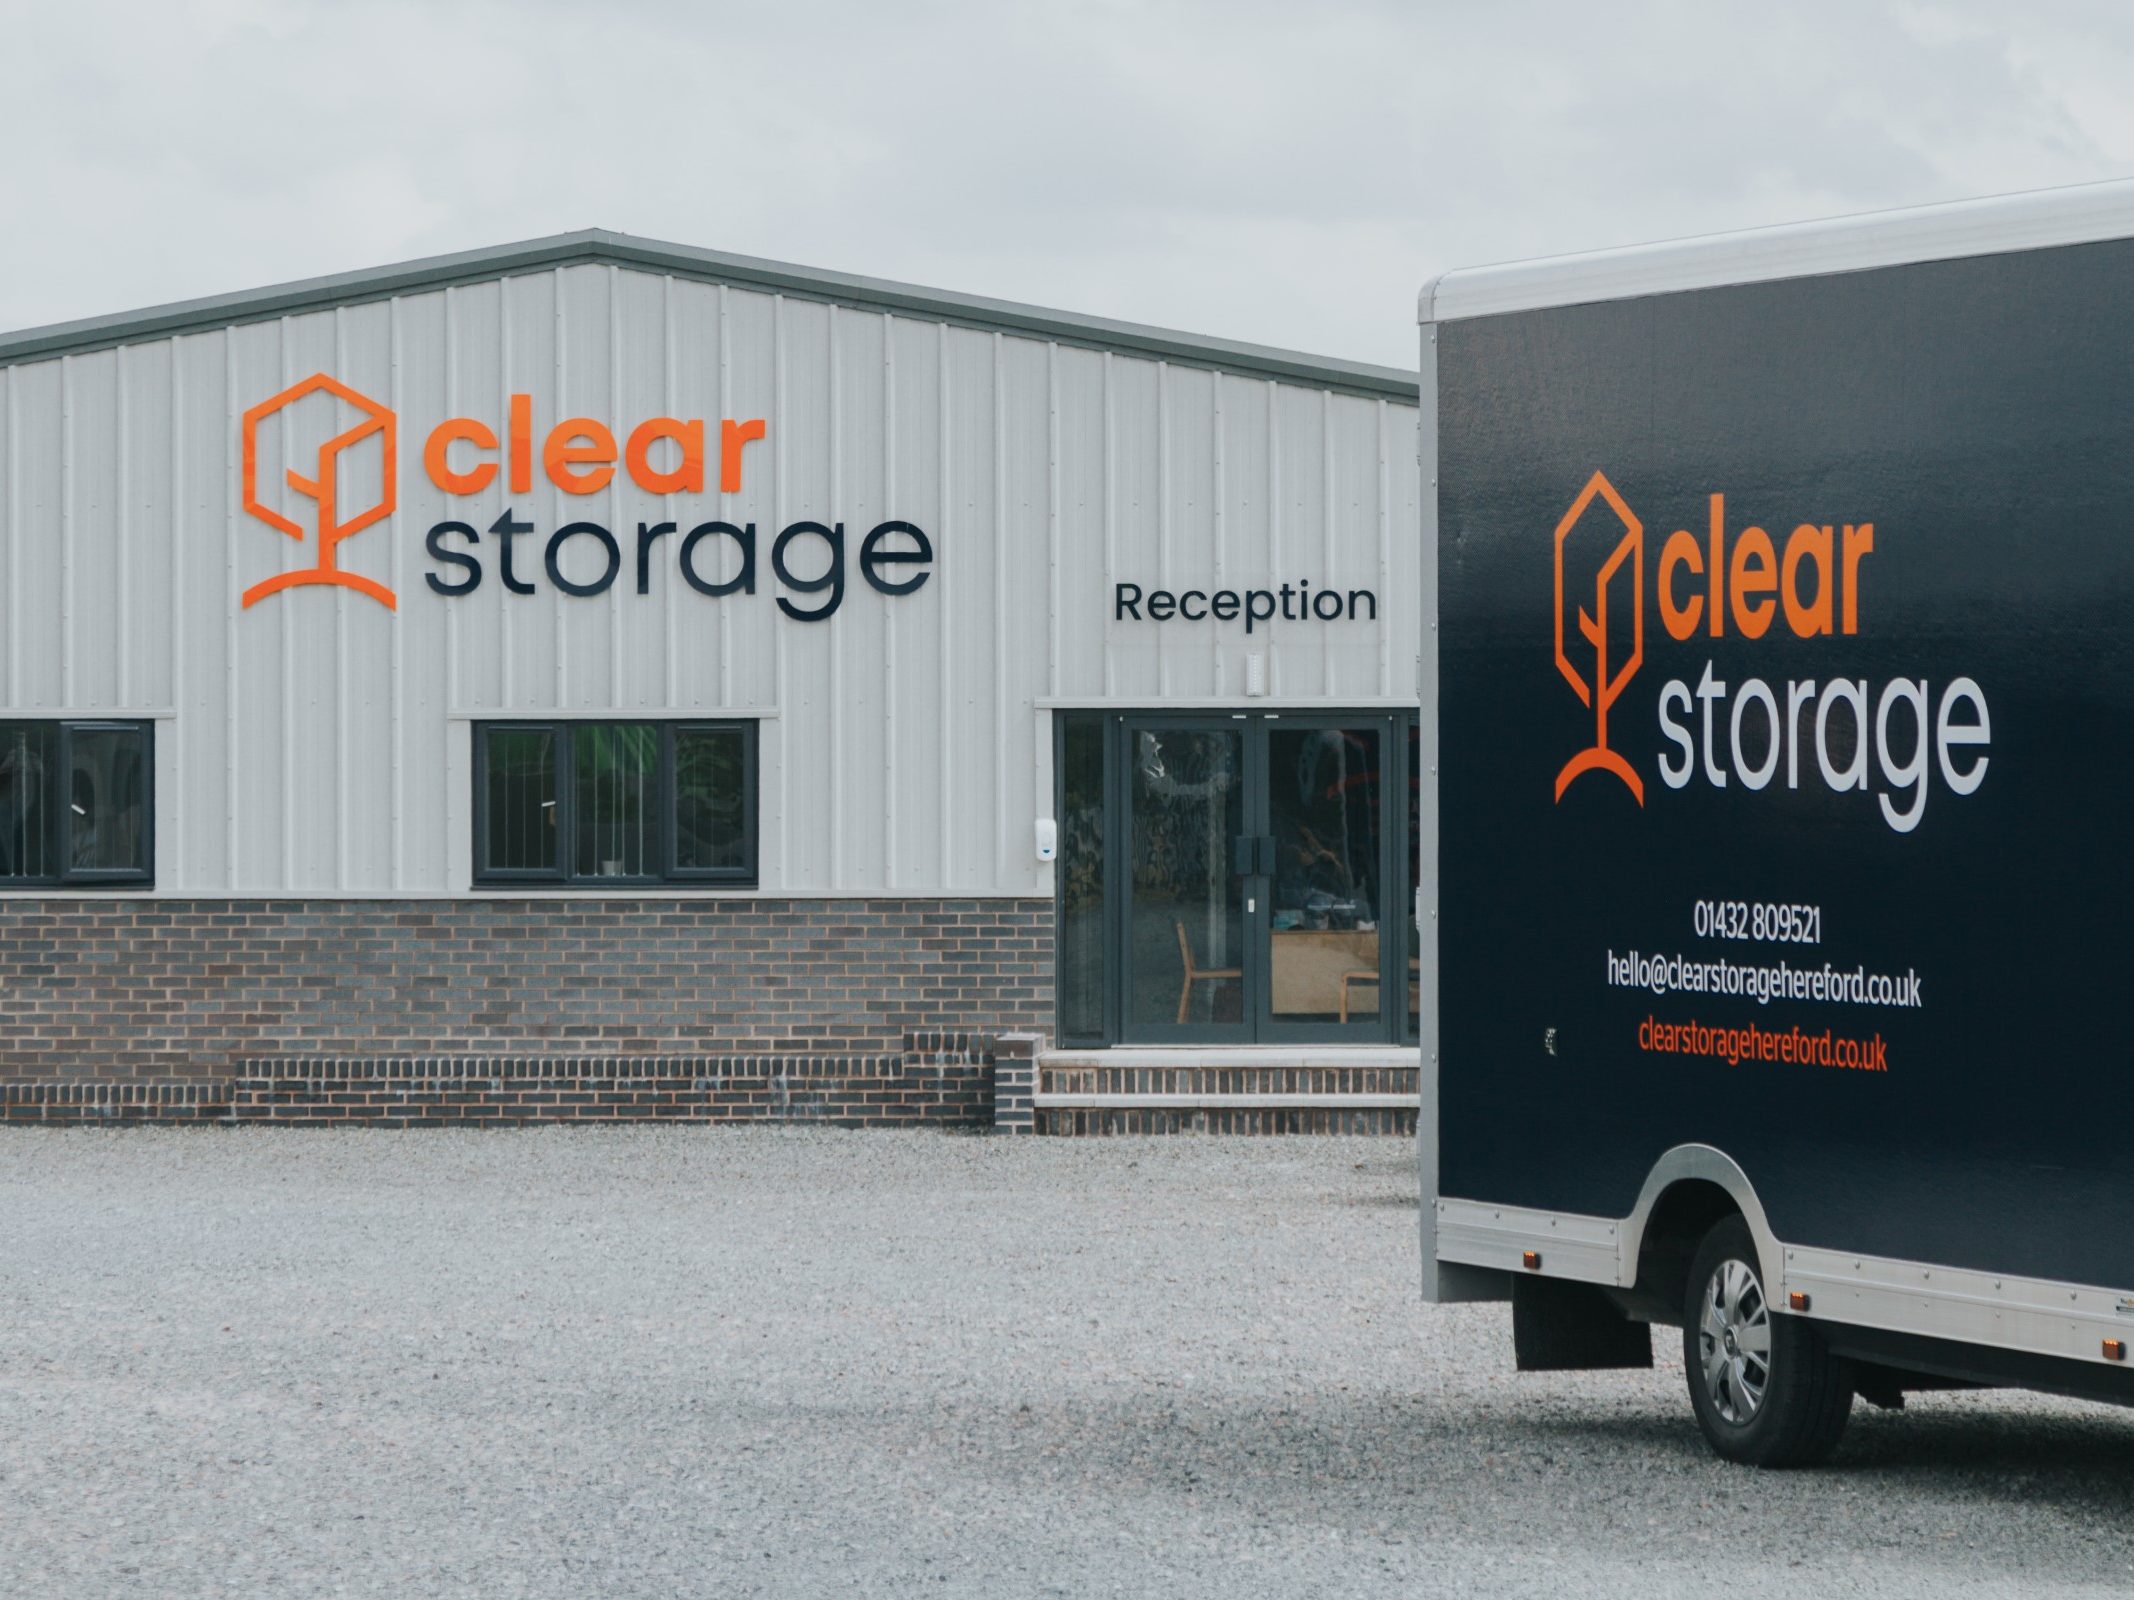 Clear-Storage-Van-7-of-30-1-aspect-ratio-580-435